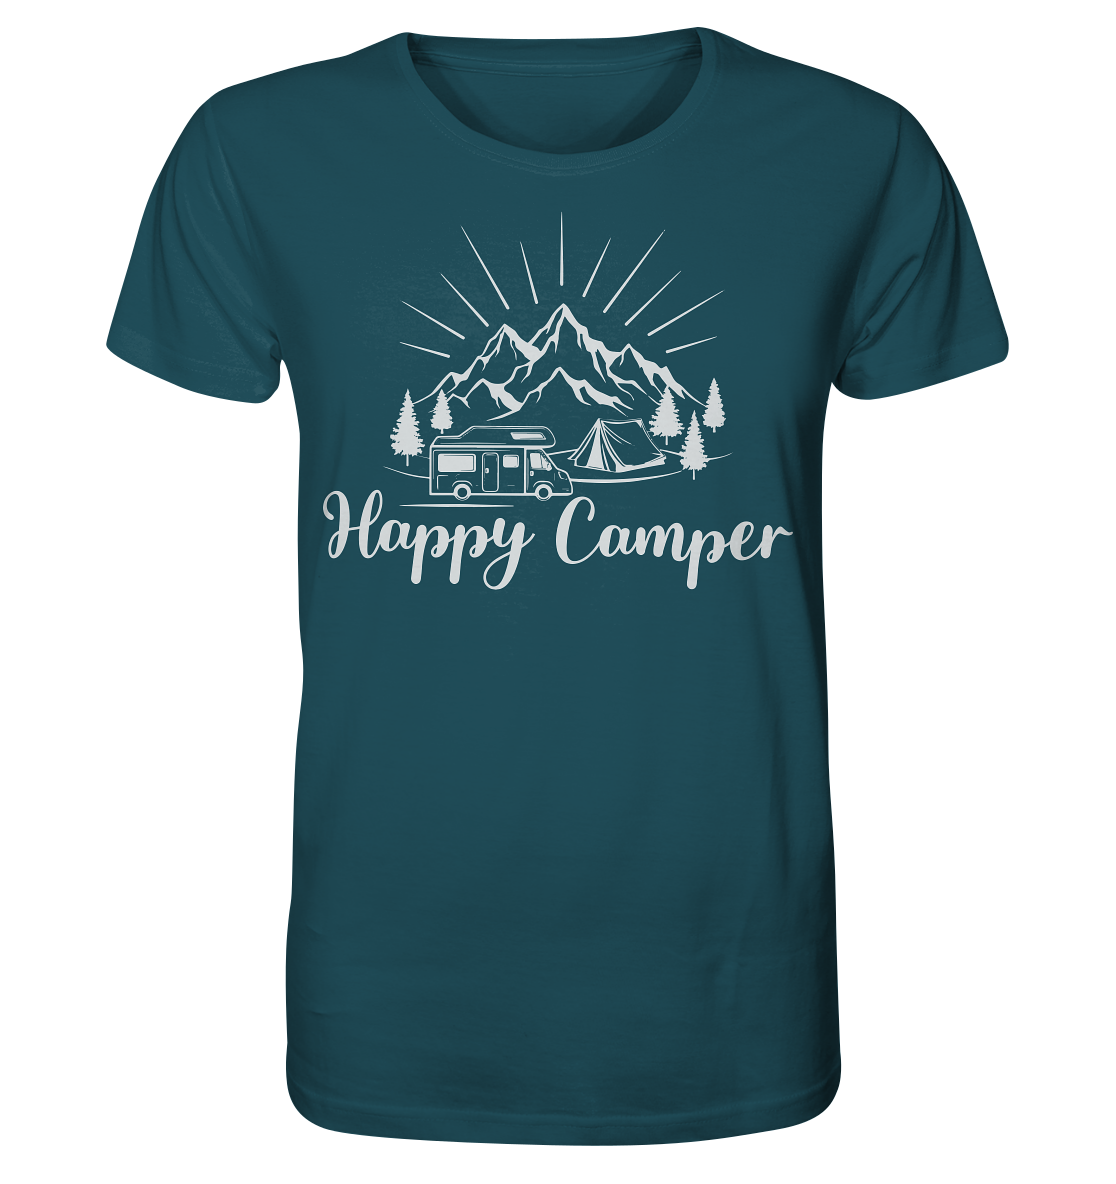 Happy Camper - Organic Shirt